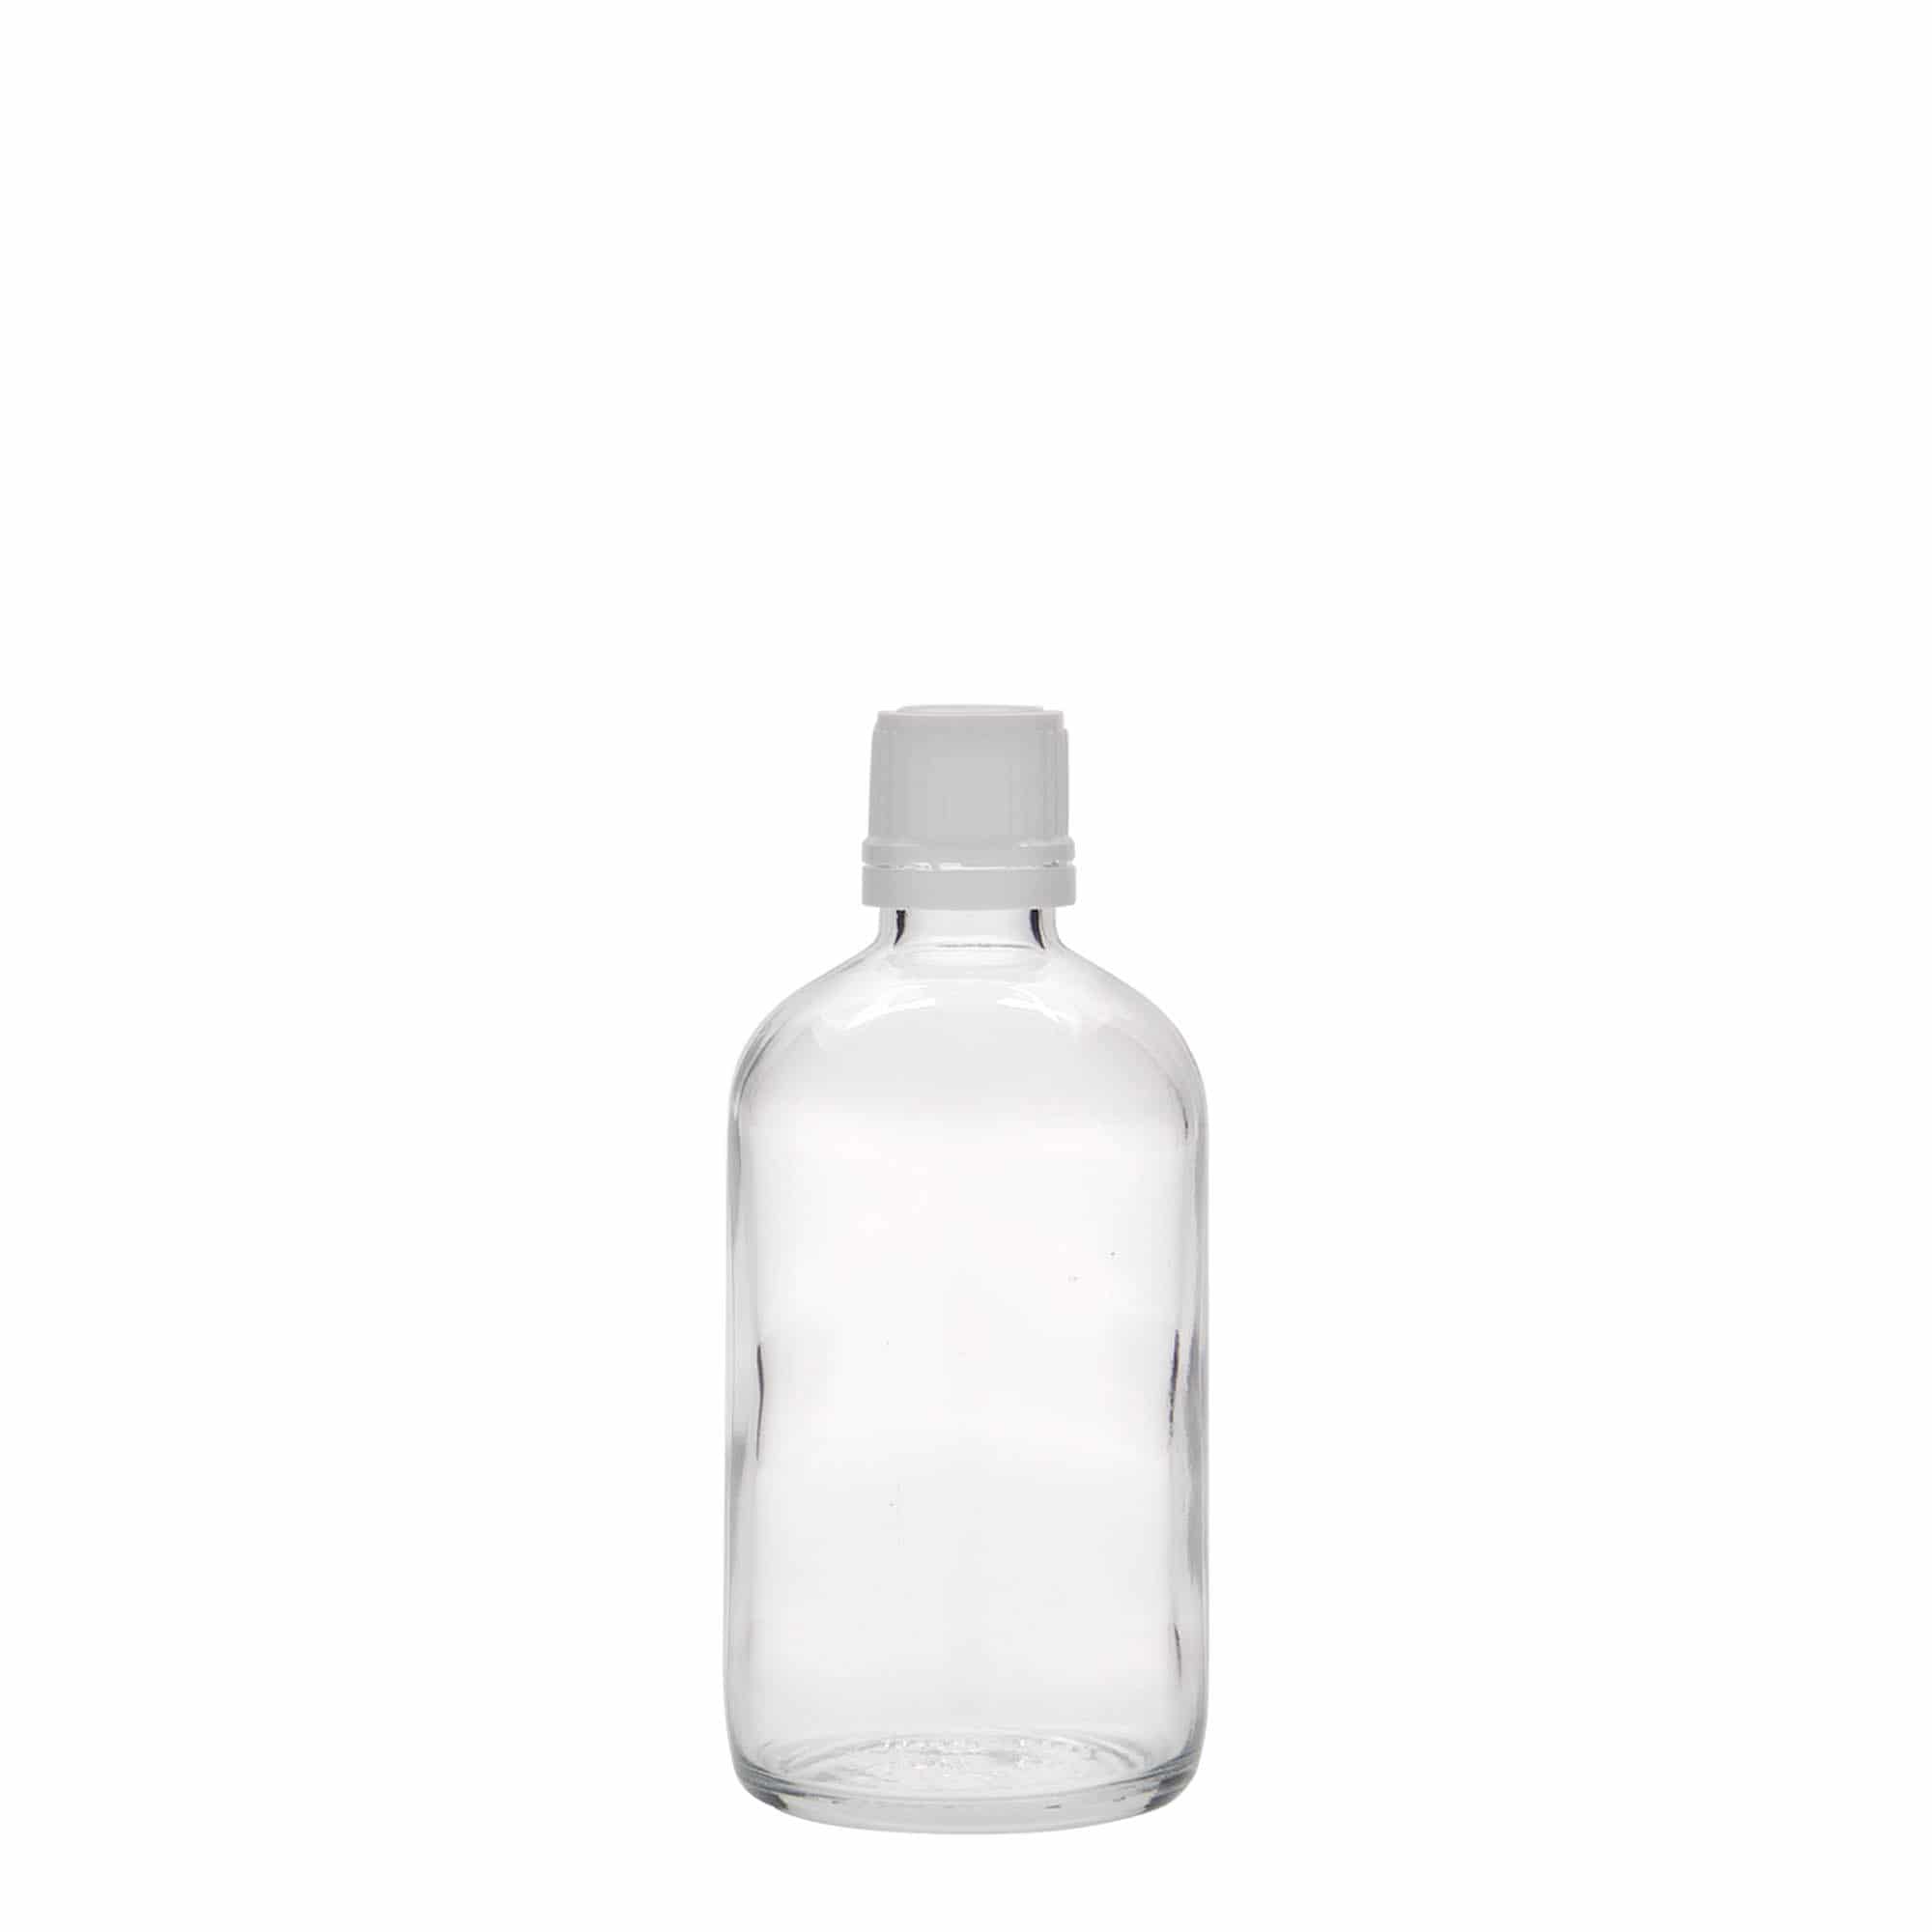 Flacon pharmaceutique 100 ml, verre, bouchage: DIN 18